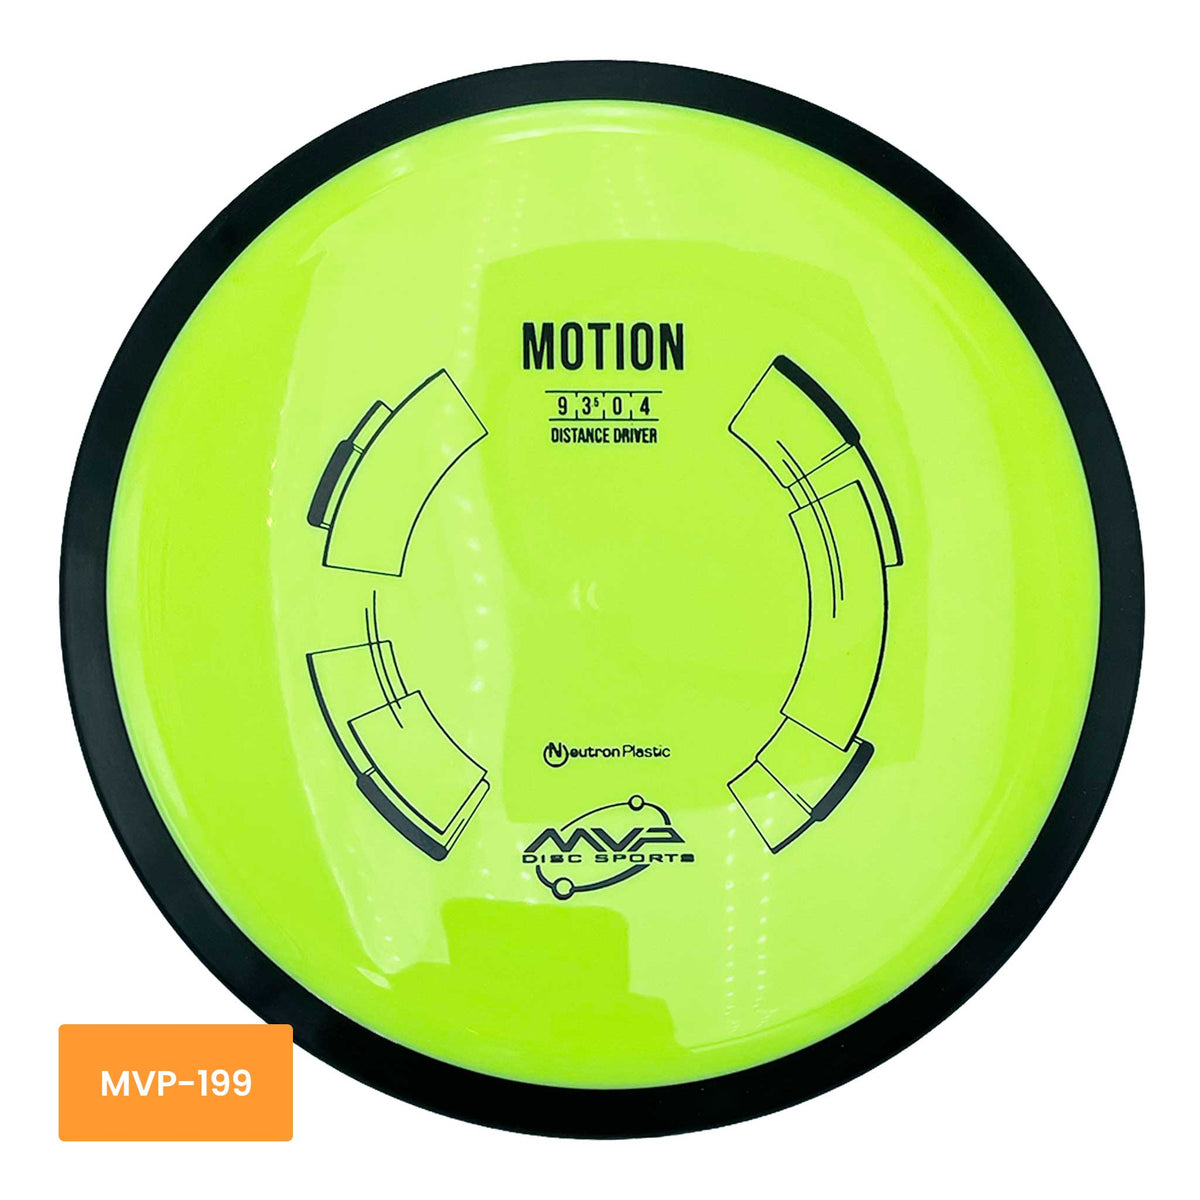 MVP Disc Sports Neutron Motion distance driver - Lime Green